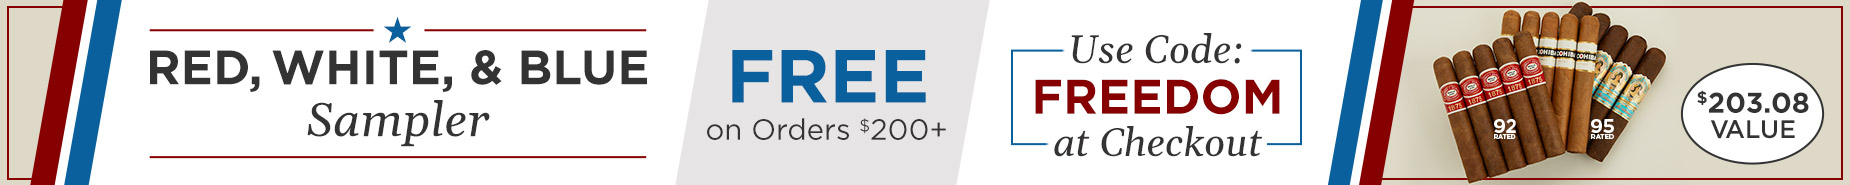 FREE Sampler! Code: FREEDOM on Orders $200+